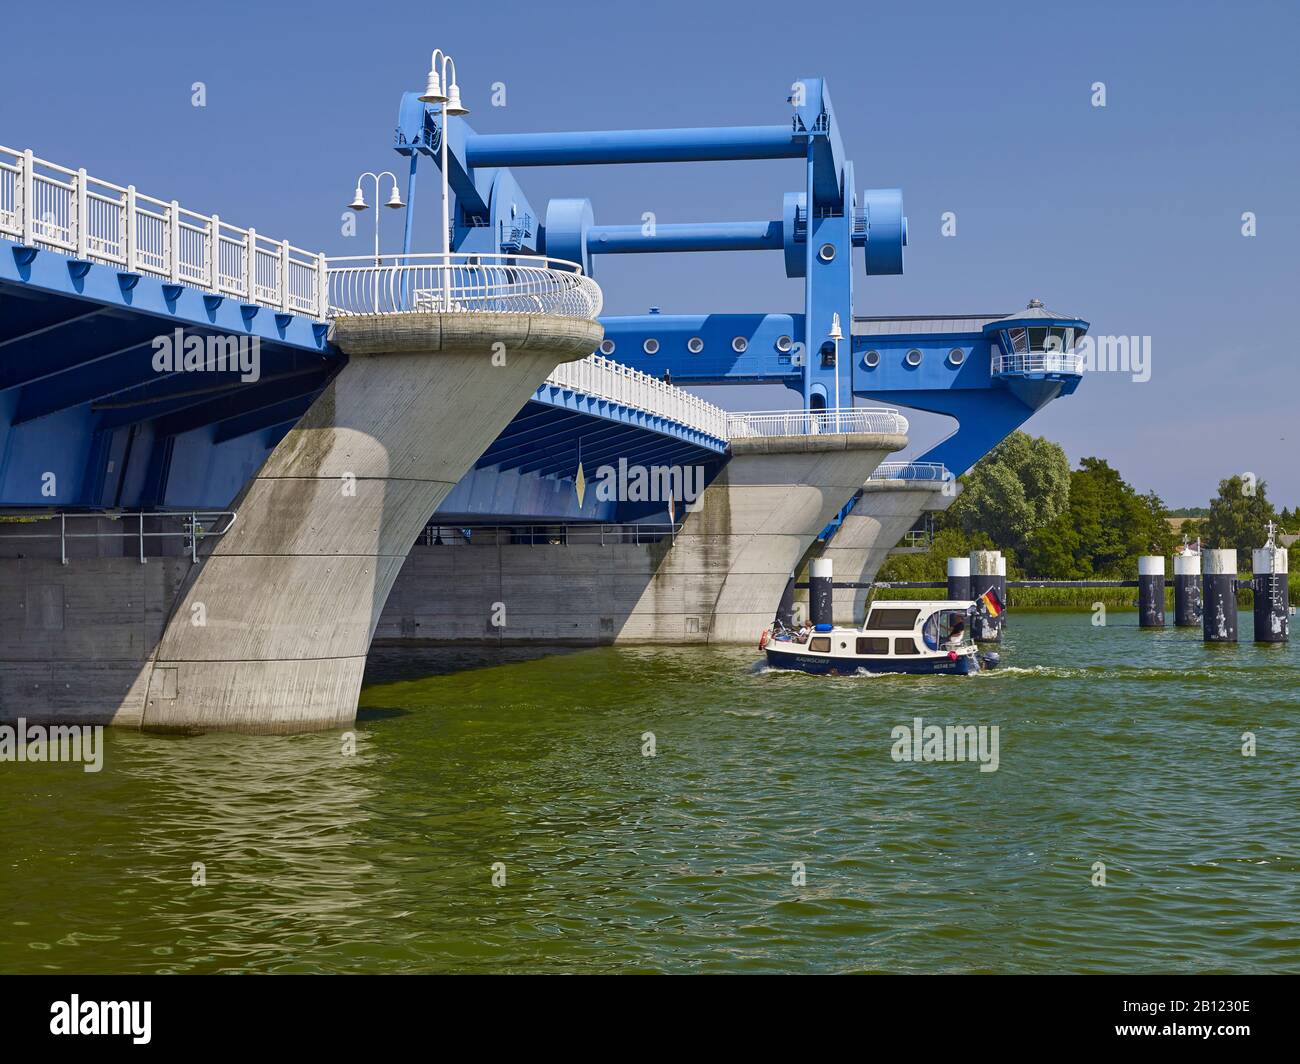 Wagebalken bascule bridge over the Peene, Wolgast, Mecklenburg-West Pomerania, Germany Stock Photo